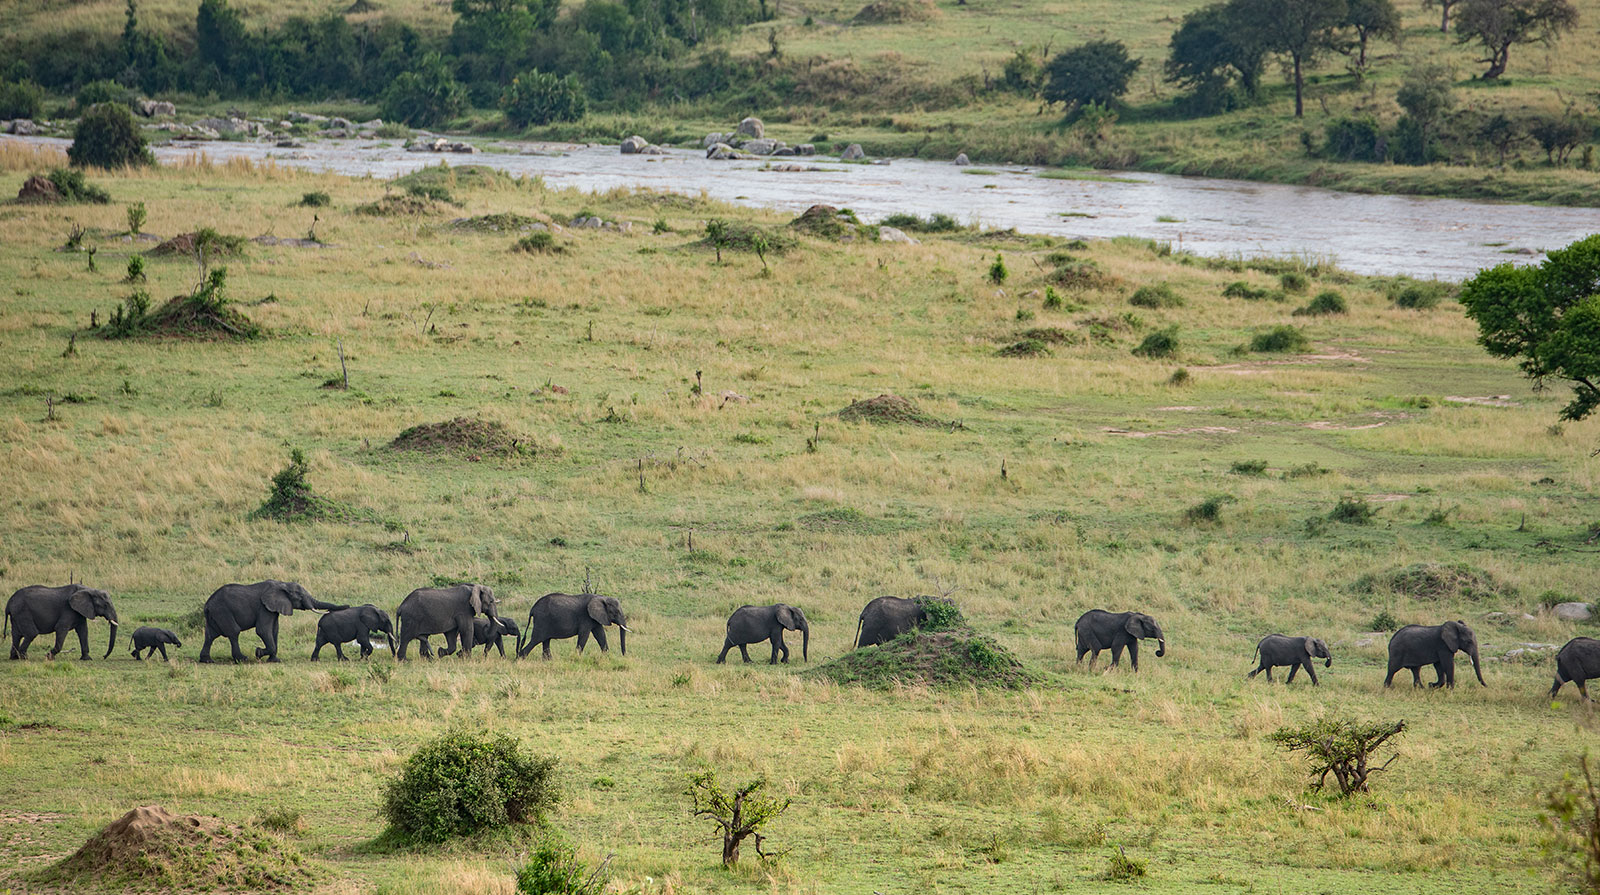 Mara River Post - Abundant wildlife